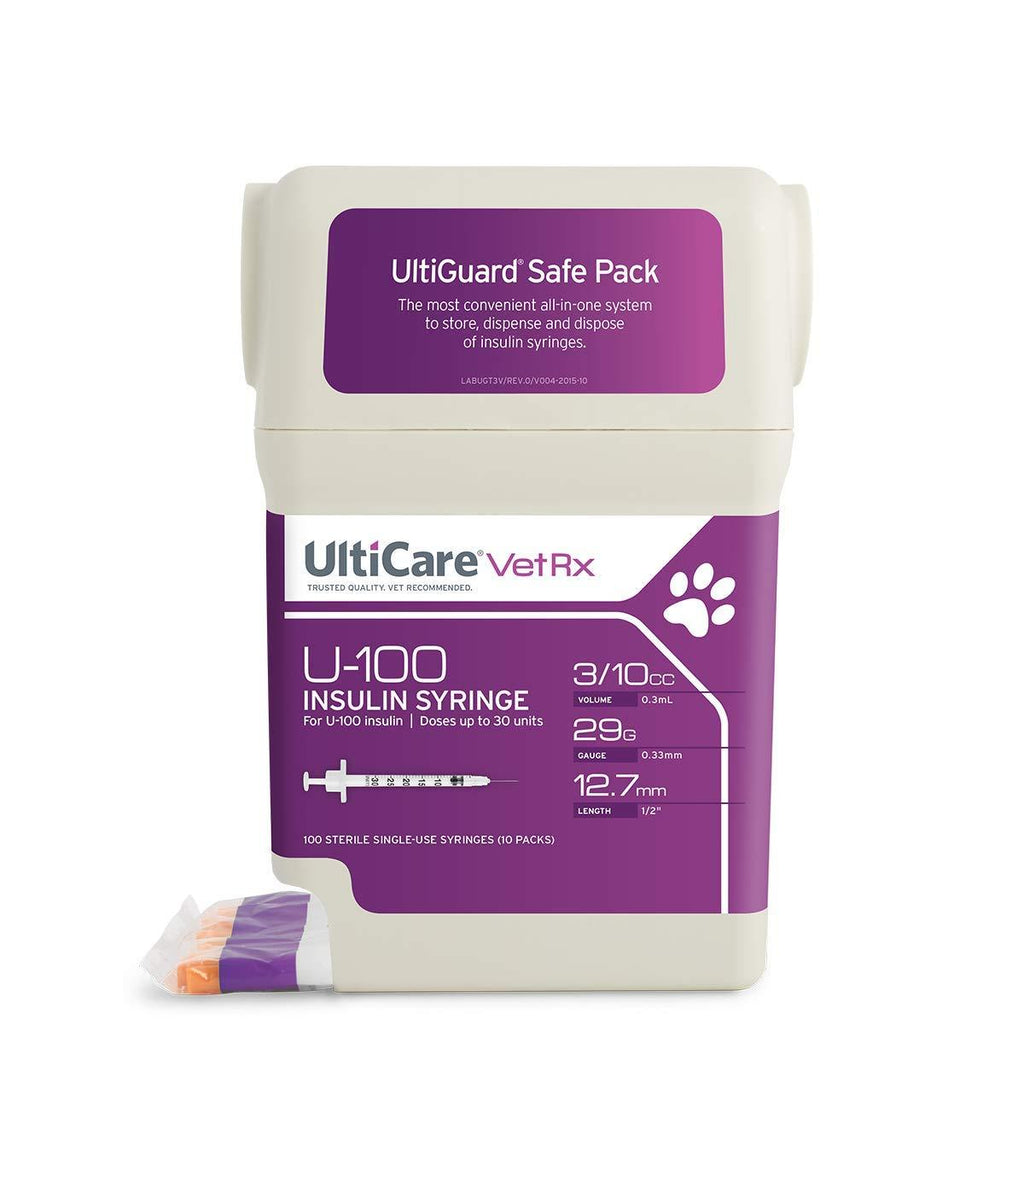 [Australia] - UltiCare VetRx U-100 UltiGuard Safe Pack Pet Insulin Syringes 3/10cc, 29G x 1/2”, 100ct Original Version 